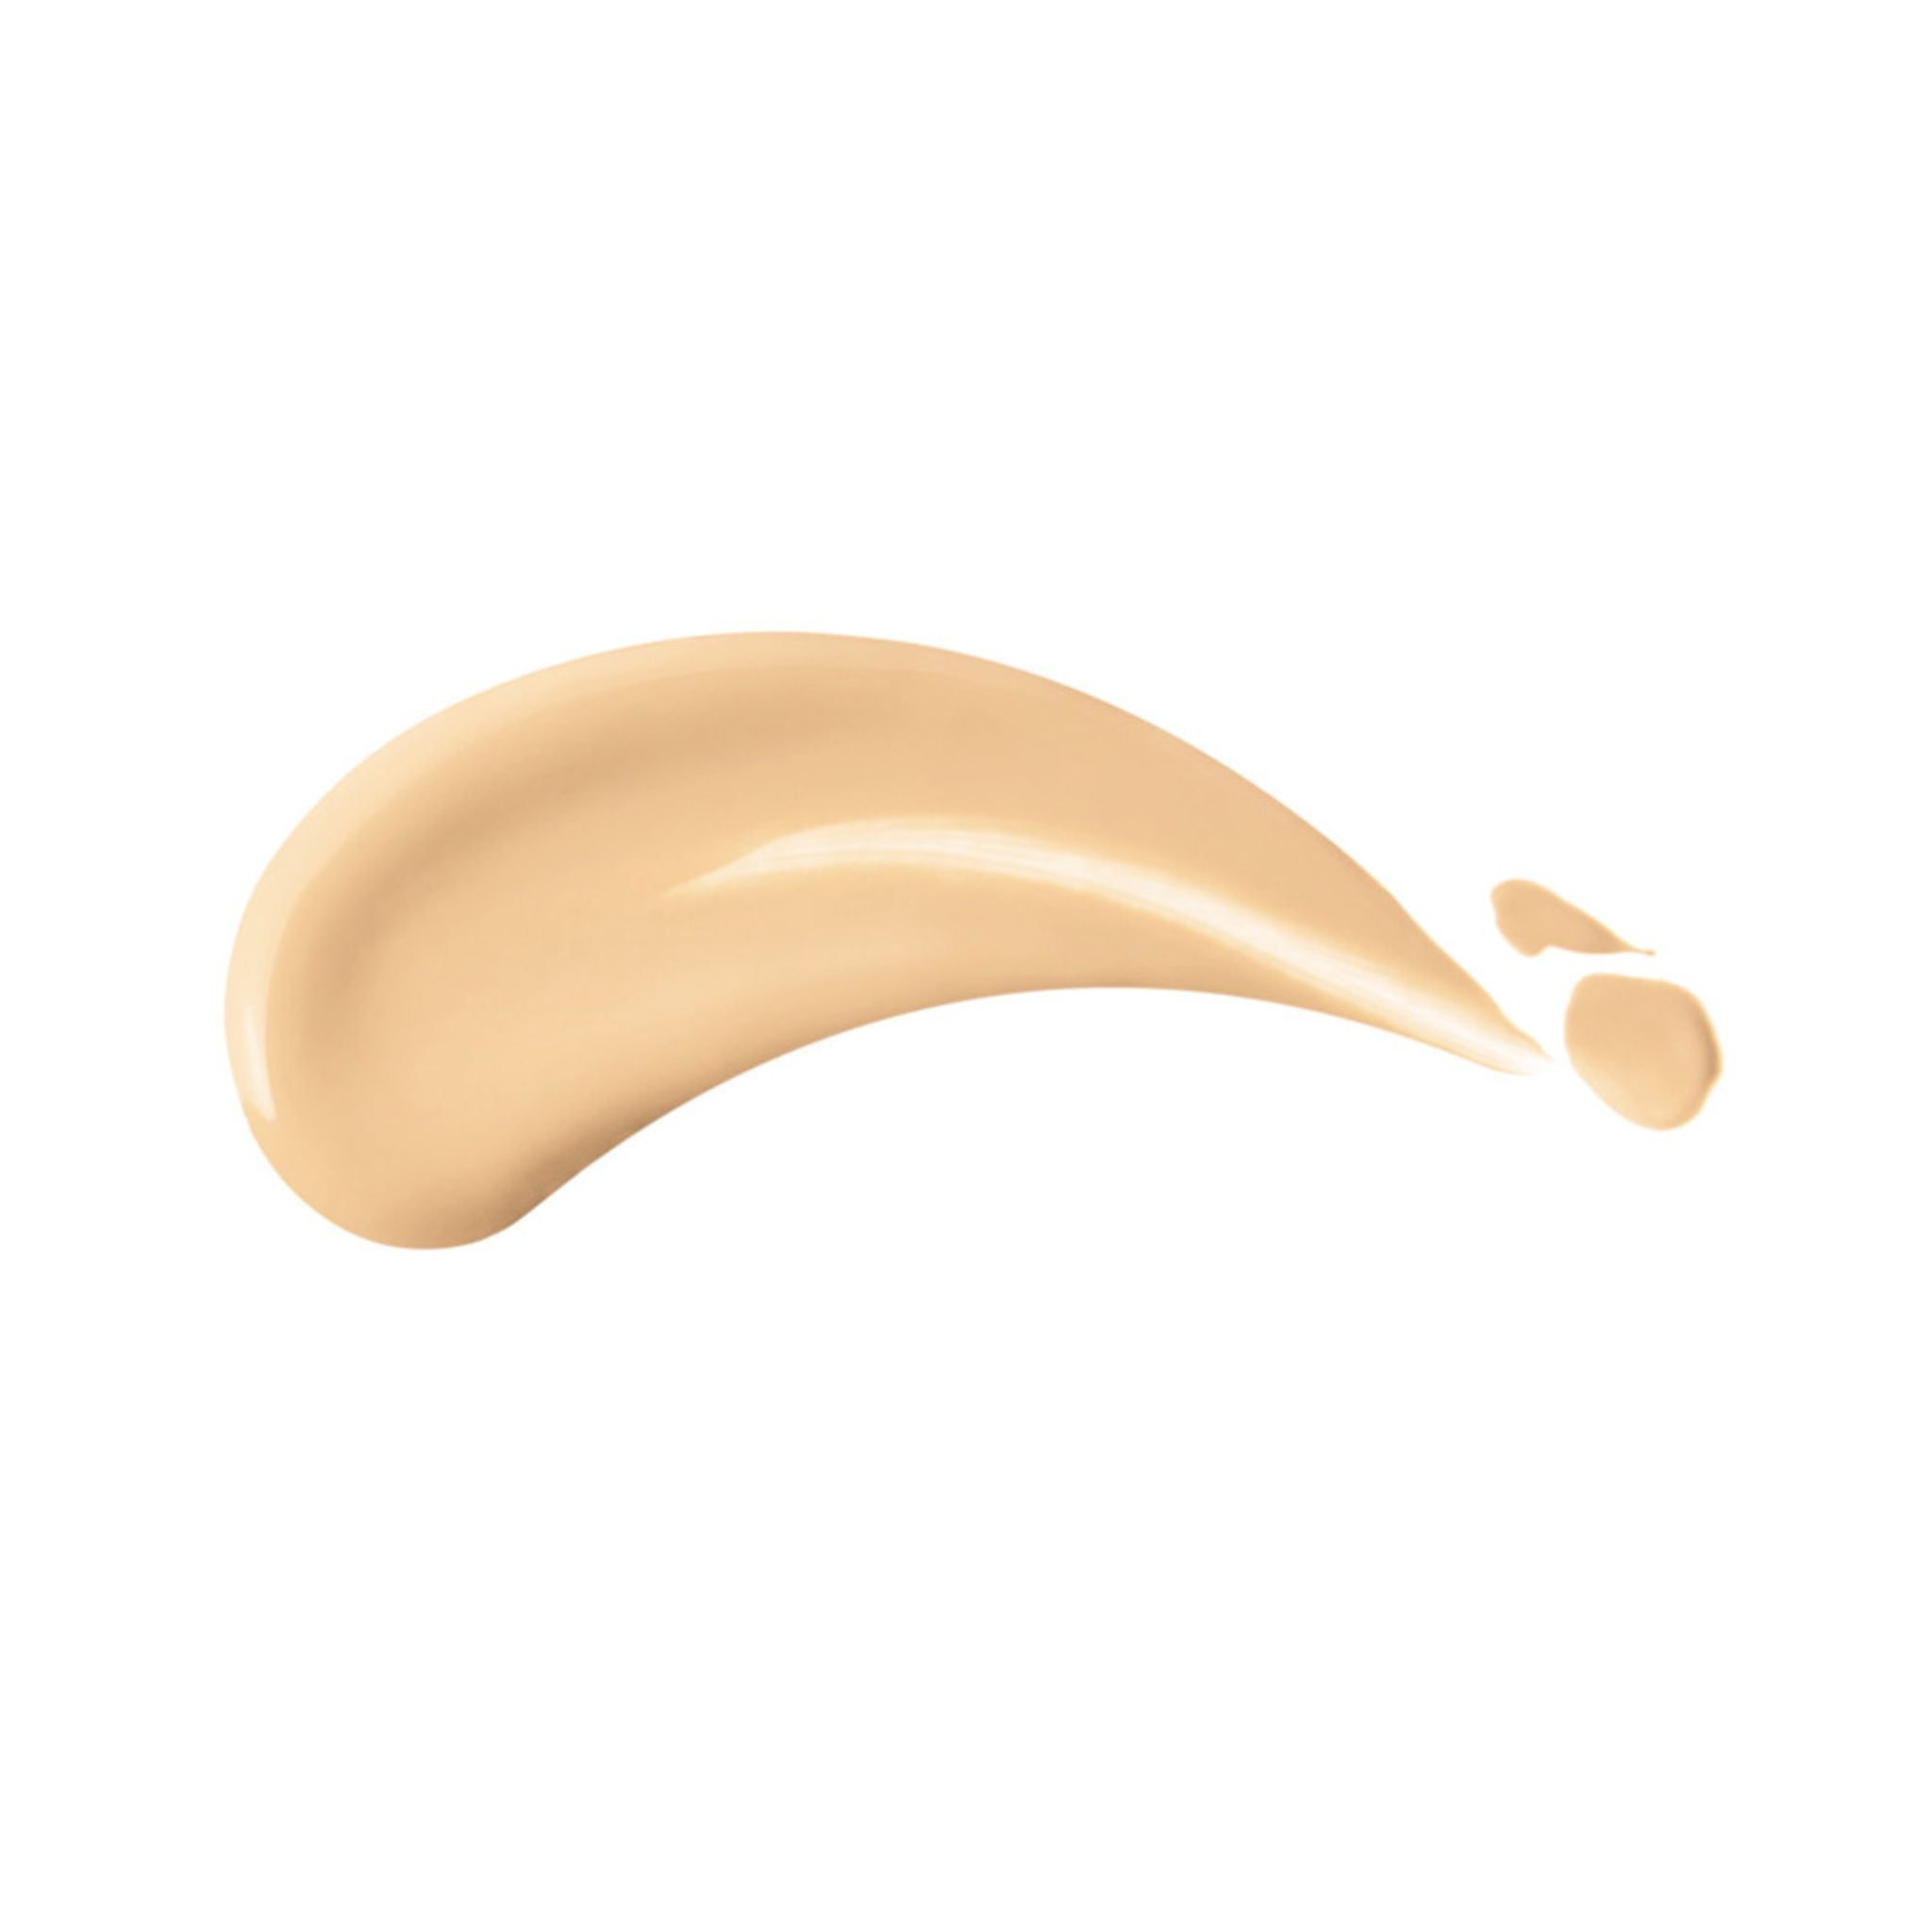 Shiseido Makeup RevitalEssence Skin Glow Foundation in 160 Shell (30ml)